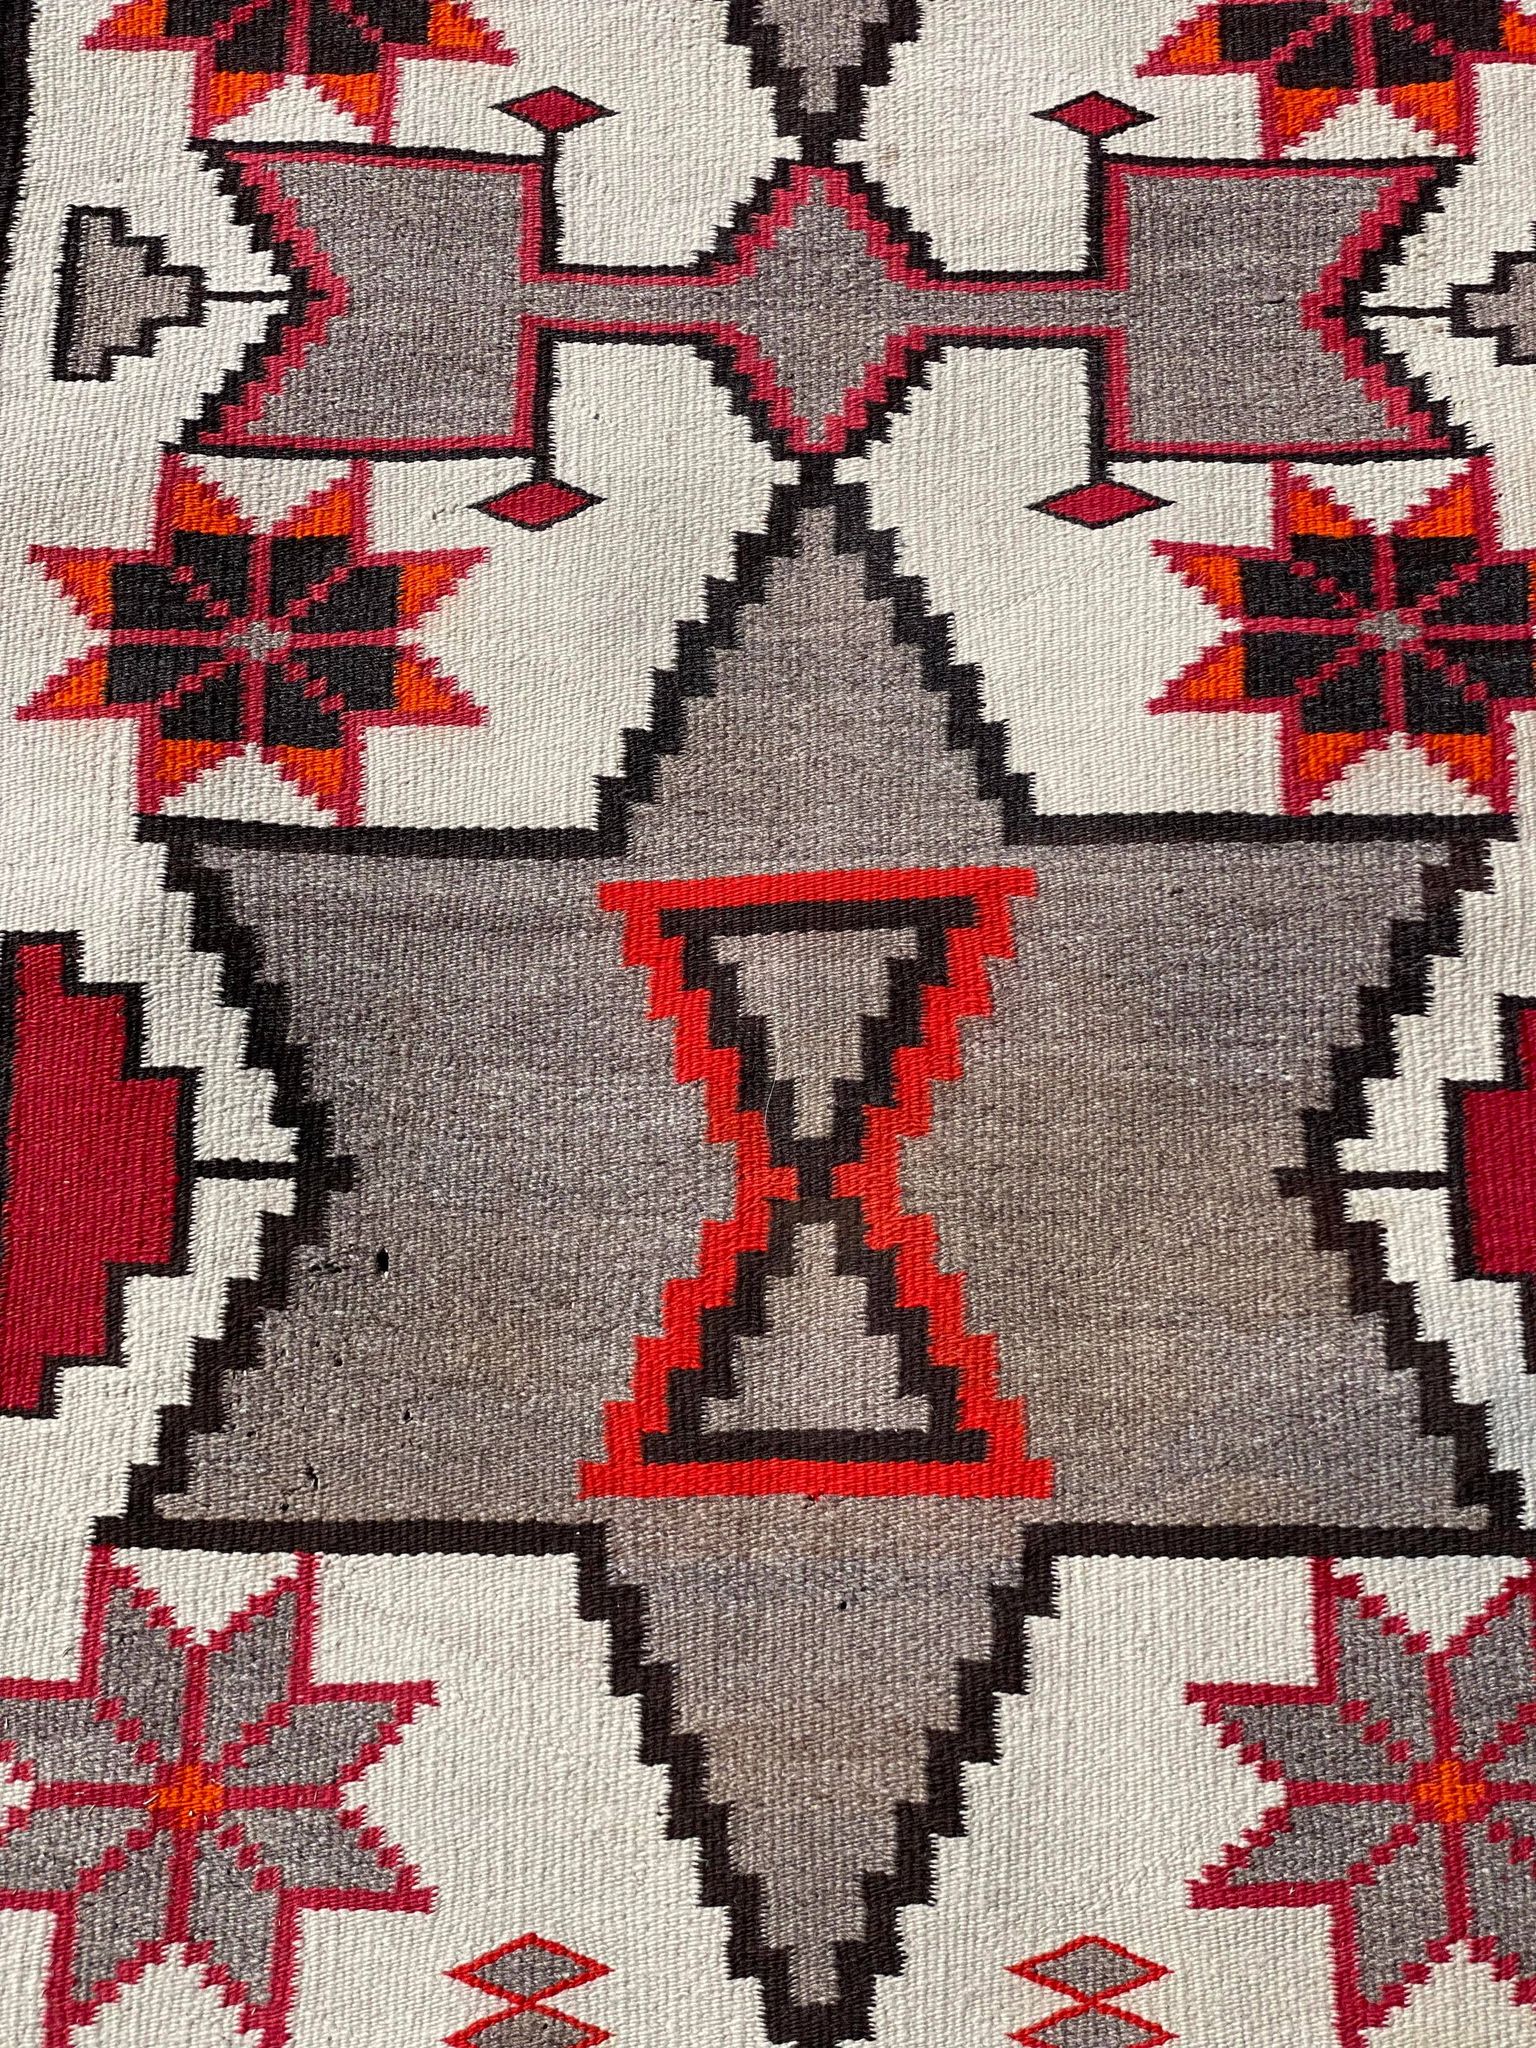 Vintage Valero Star Navajo Rug